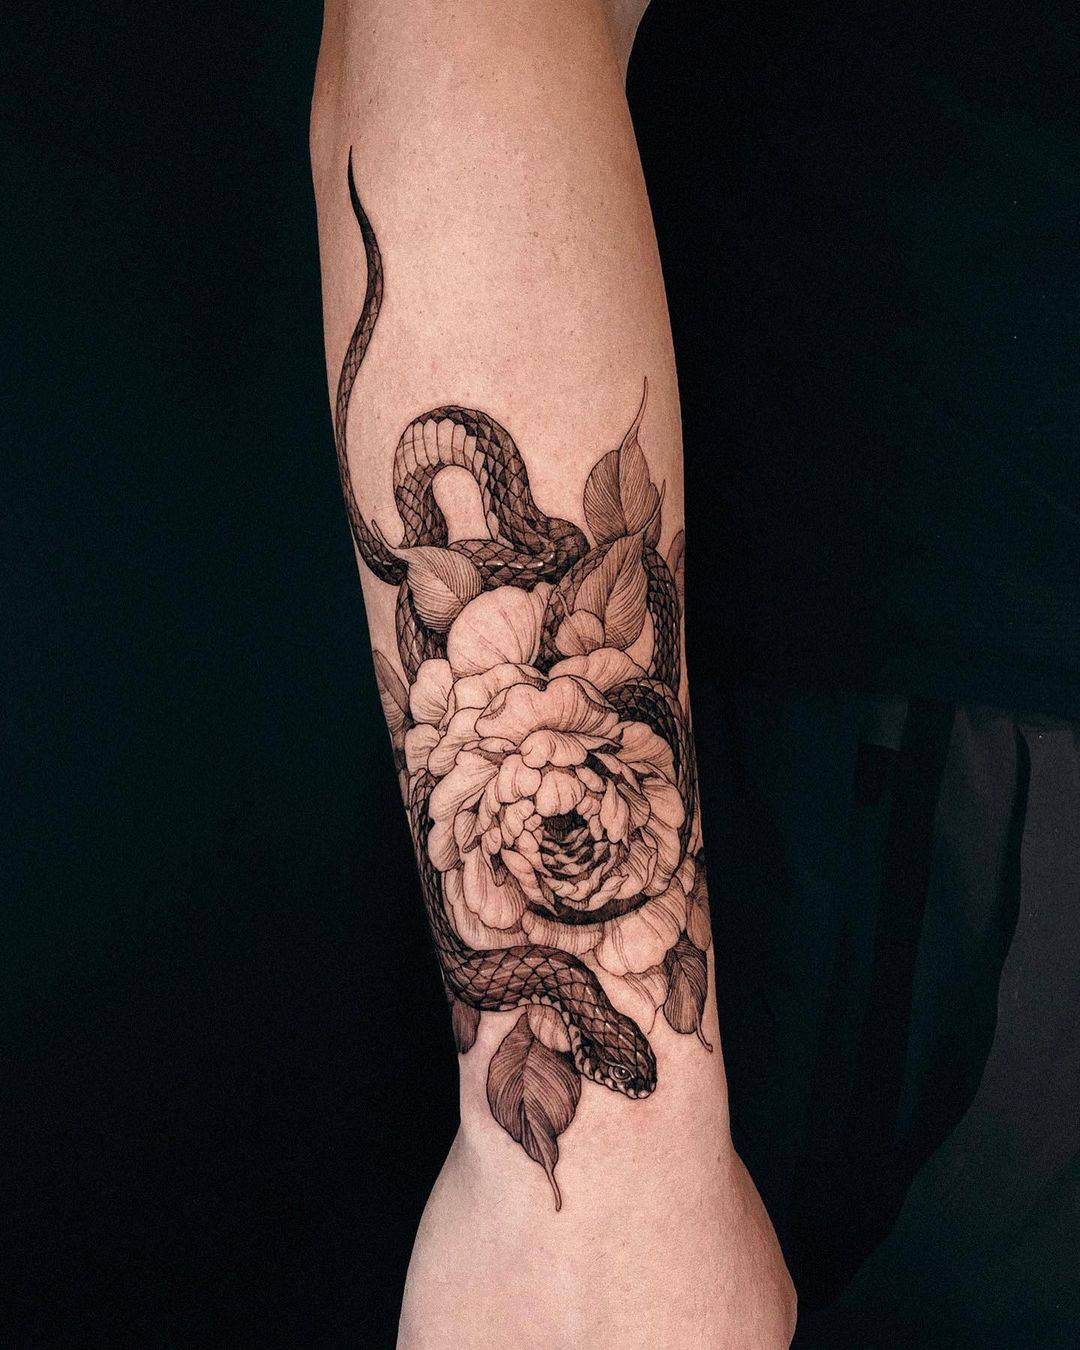 Jafaar Cool Black and White Snake Serpent Rose Flower Temporary Tattoo   MyBodiArt